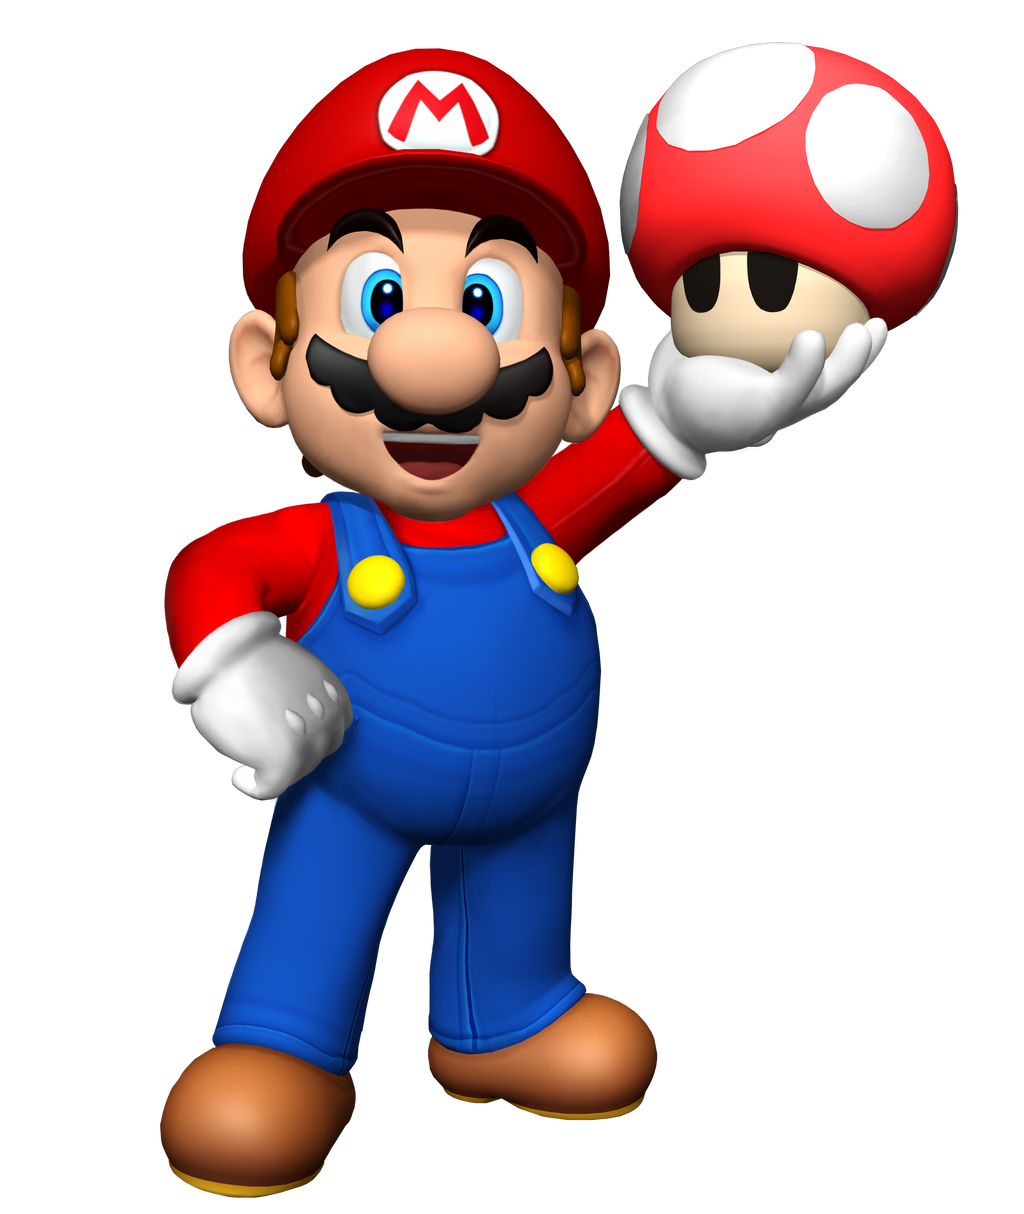 Mario with a Super Mushroum by Banjo2015 on DeviantArt